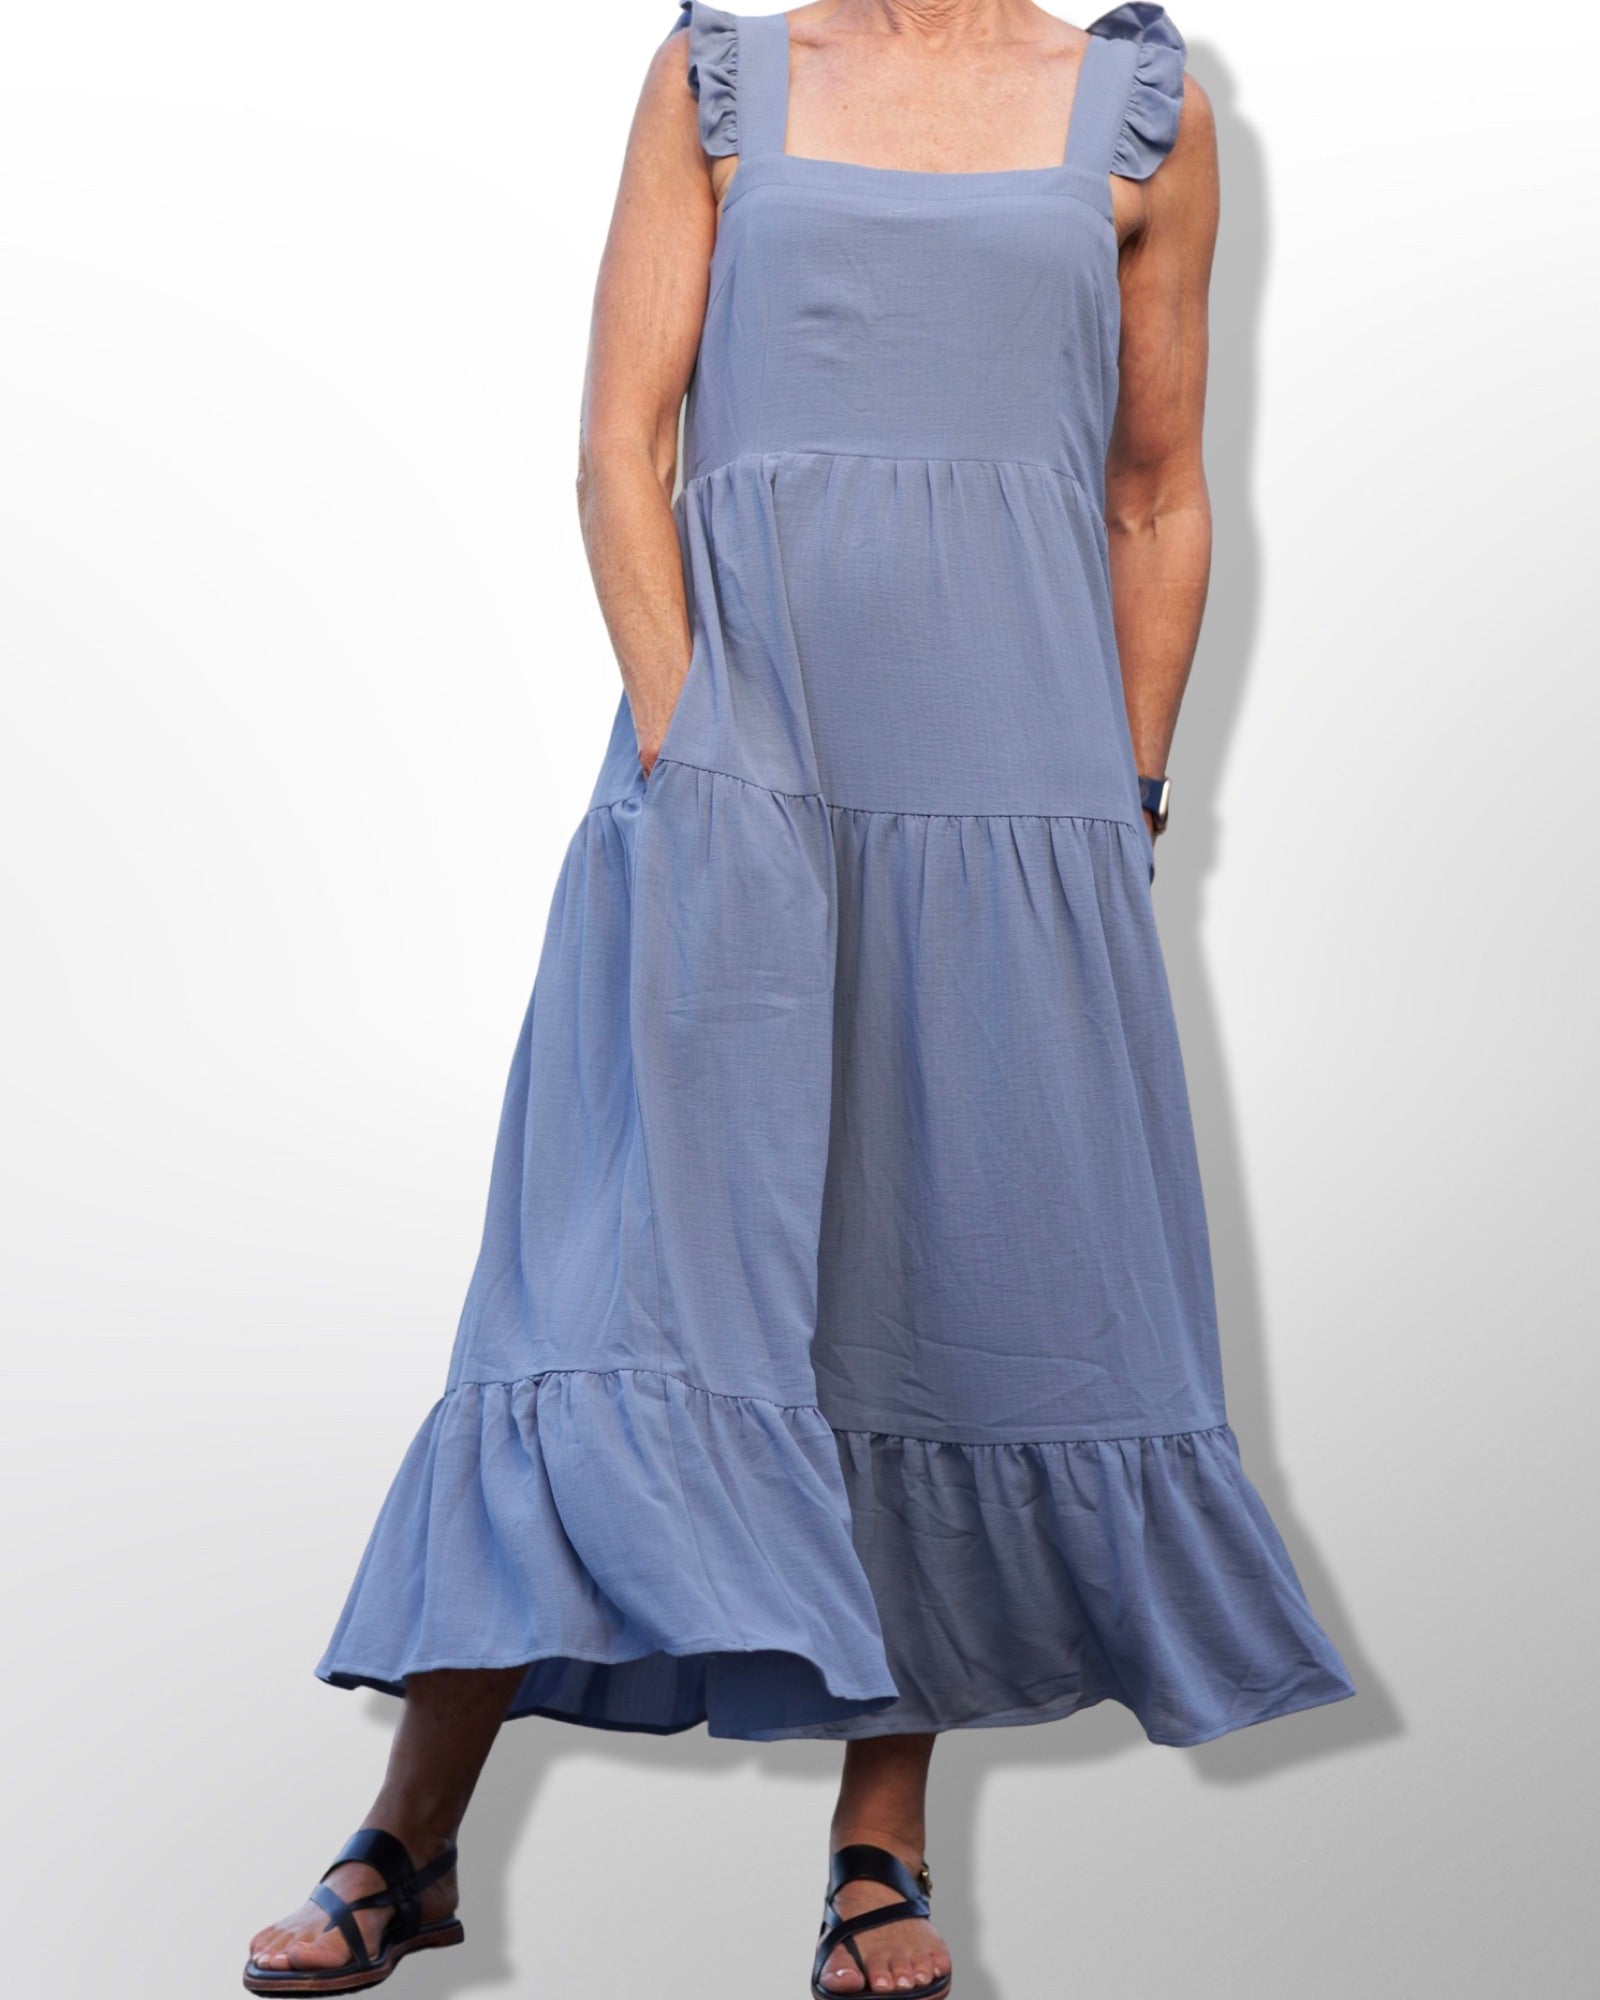 Dusty Blue Sleeveless Maxi Dress for Women with Pockets